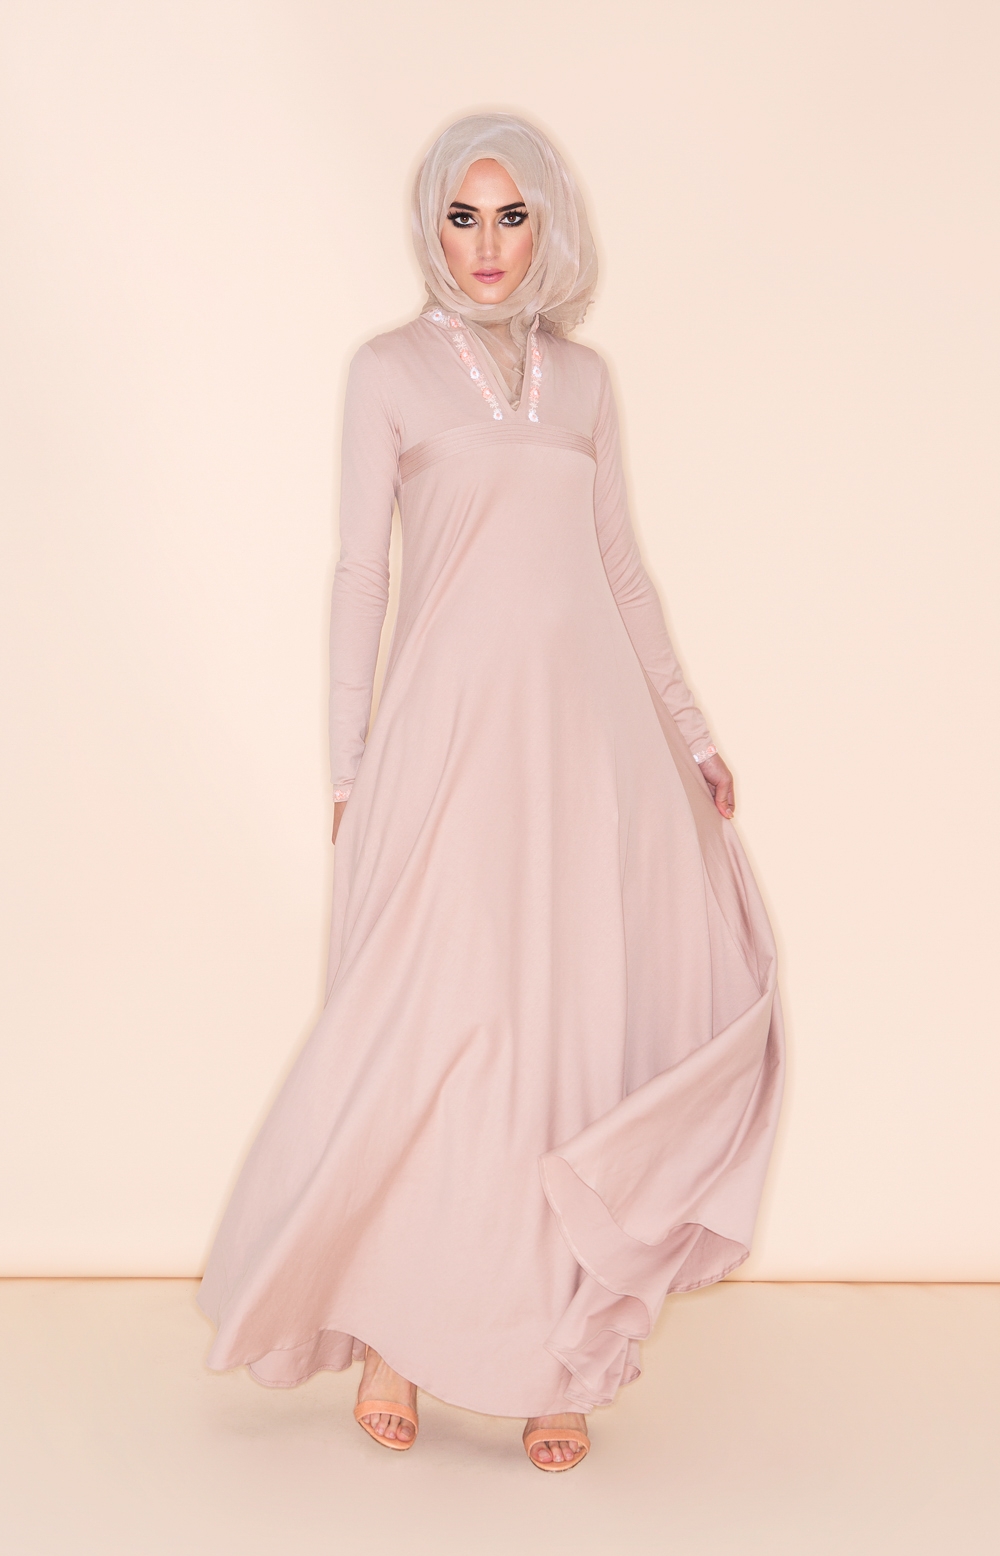 10 Contoh Model Baju  Muslim  Terbaru  2019 Model HIjab